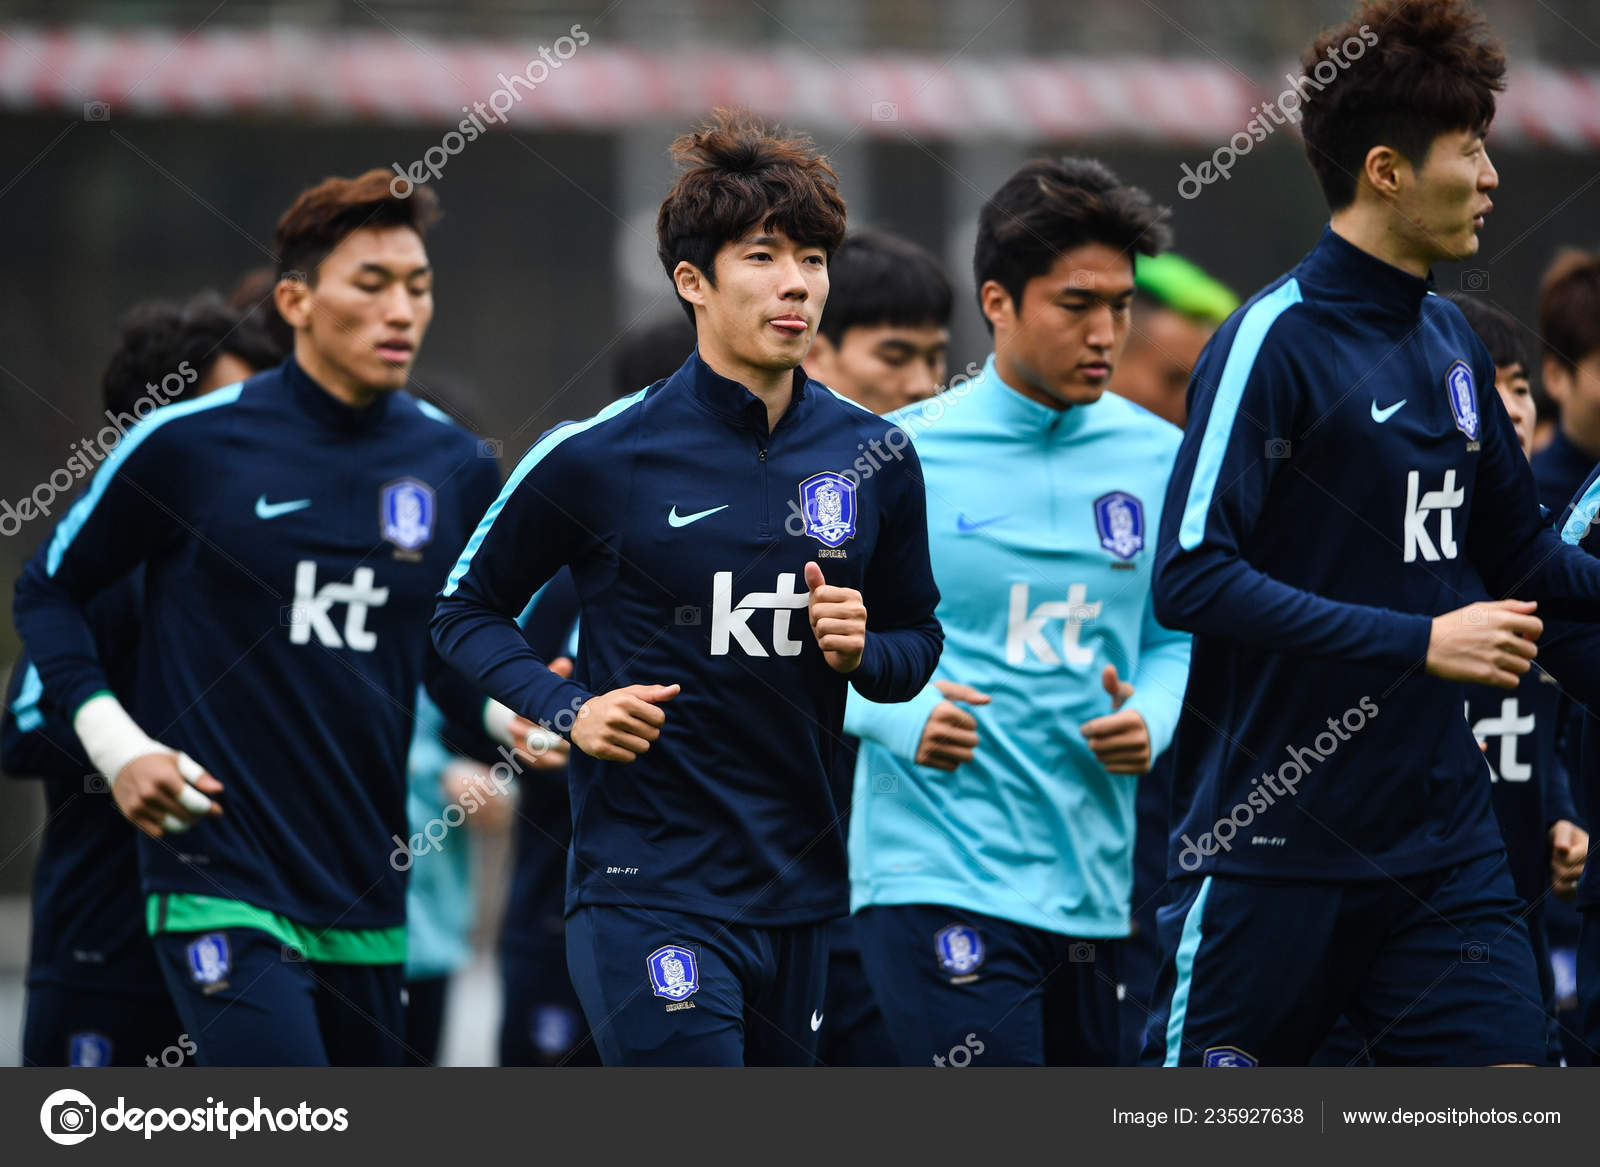 south korea national football team jersey